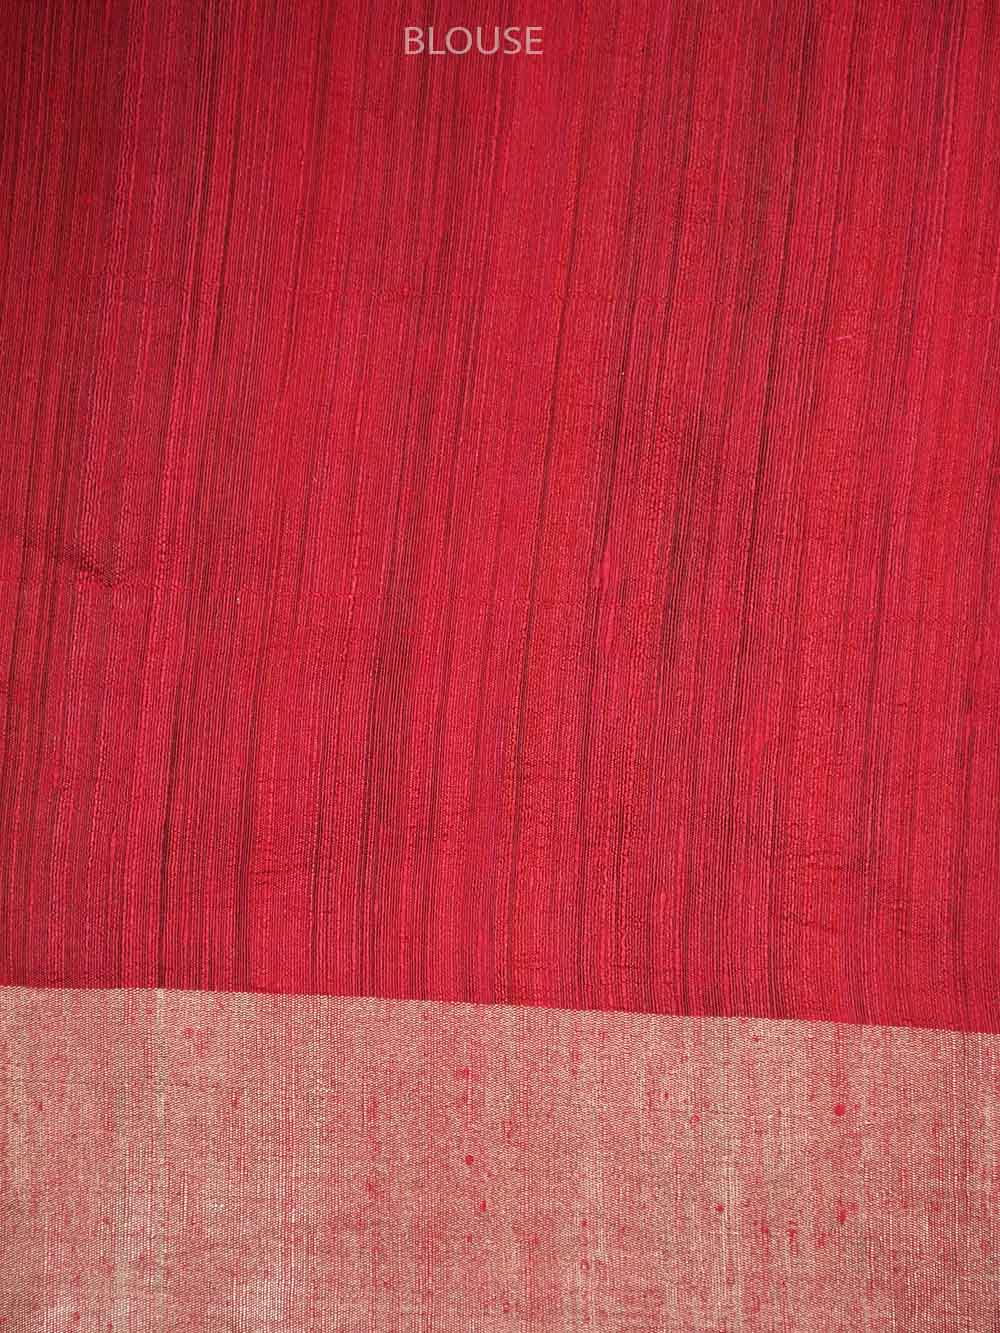 Red Boota Dupion Silk Handloom Banarasi Saree - Sacred Weaves